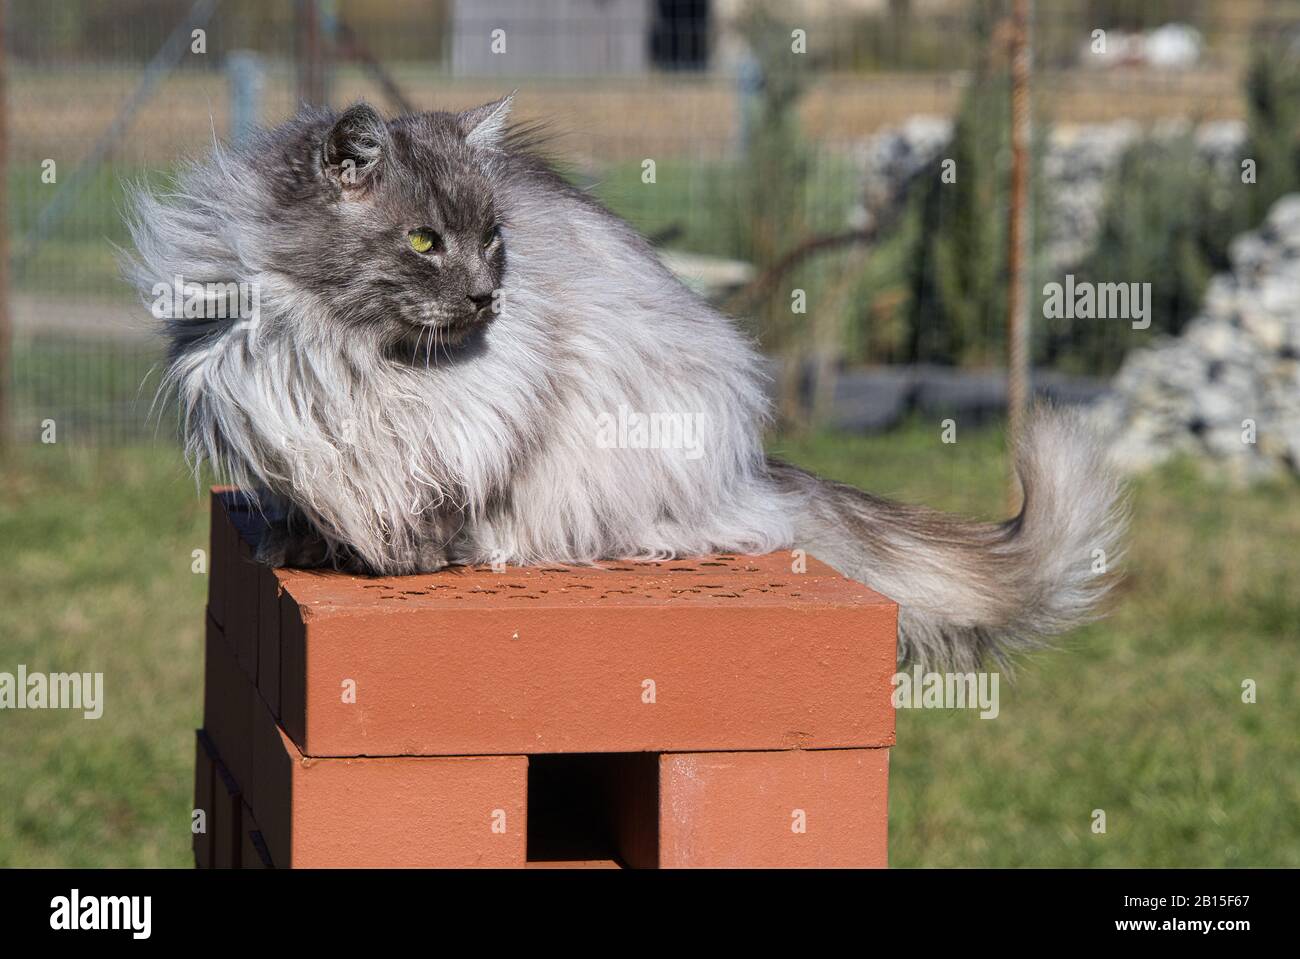 Bonito gato angora turco con ojos verdes y piel gris larga Foto de stock